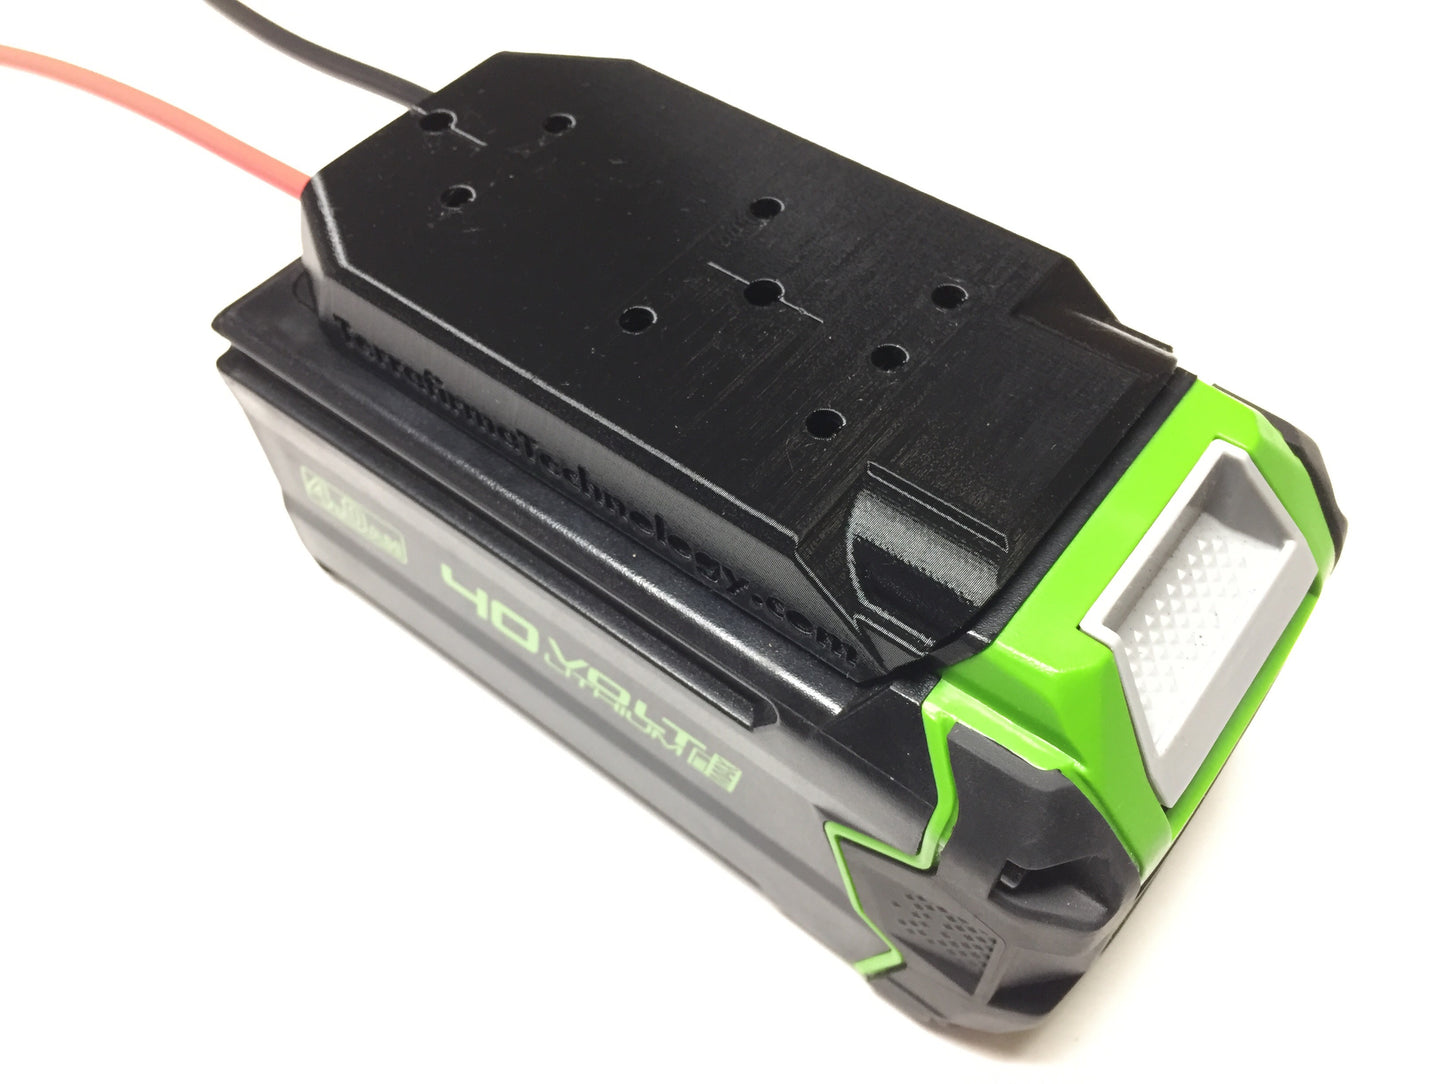 XT adapter for Greenworks 40V or strikemaster battery